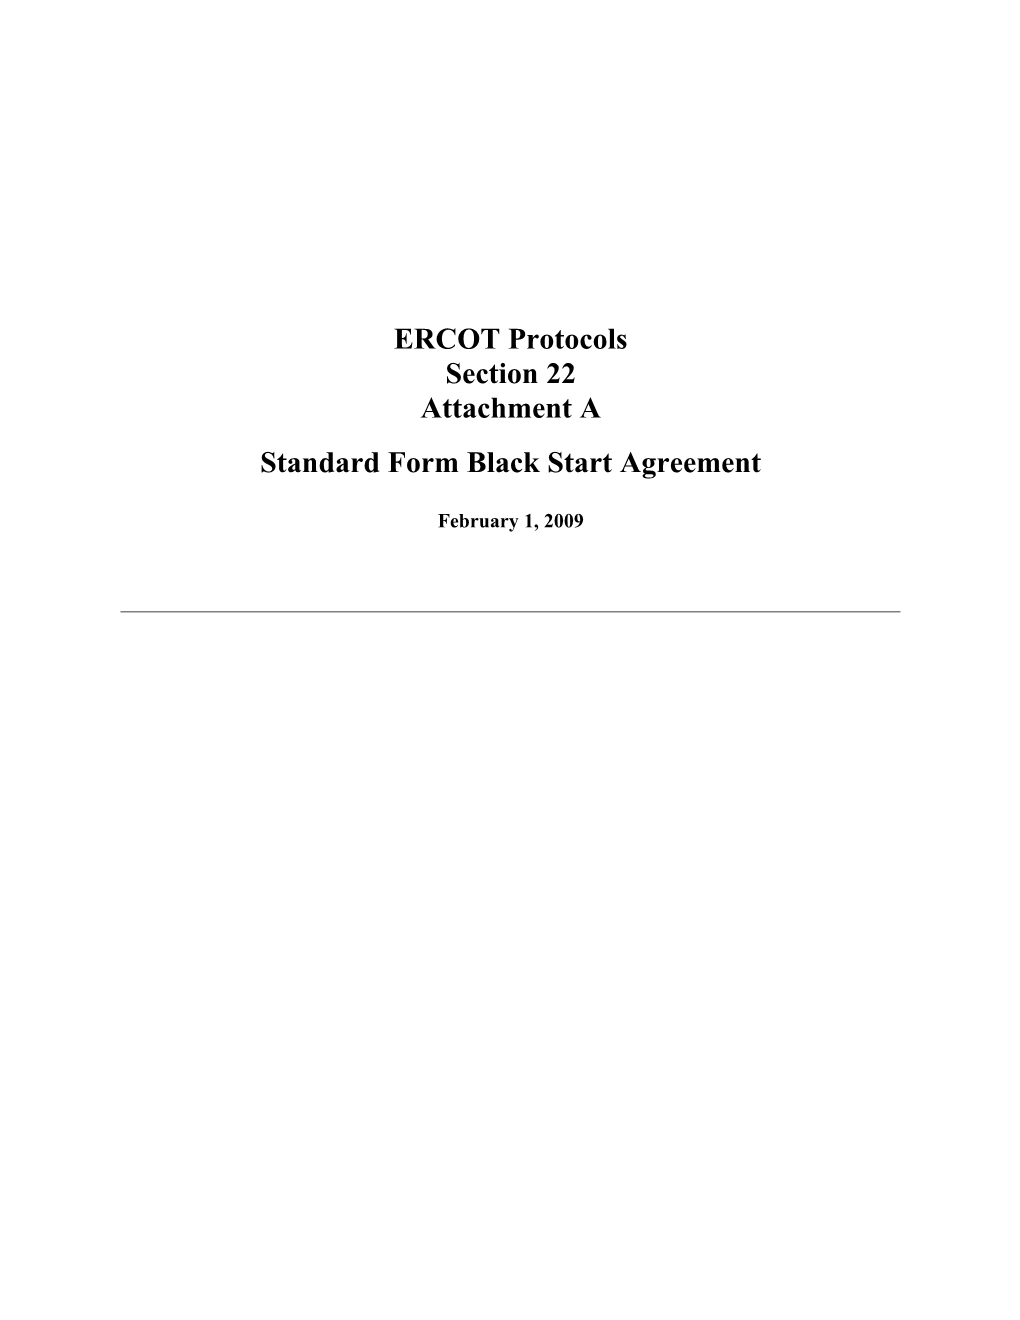 Standard Form Black Start Agreement